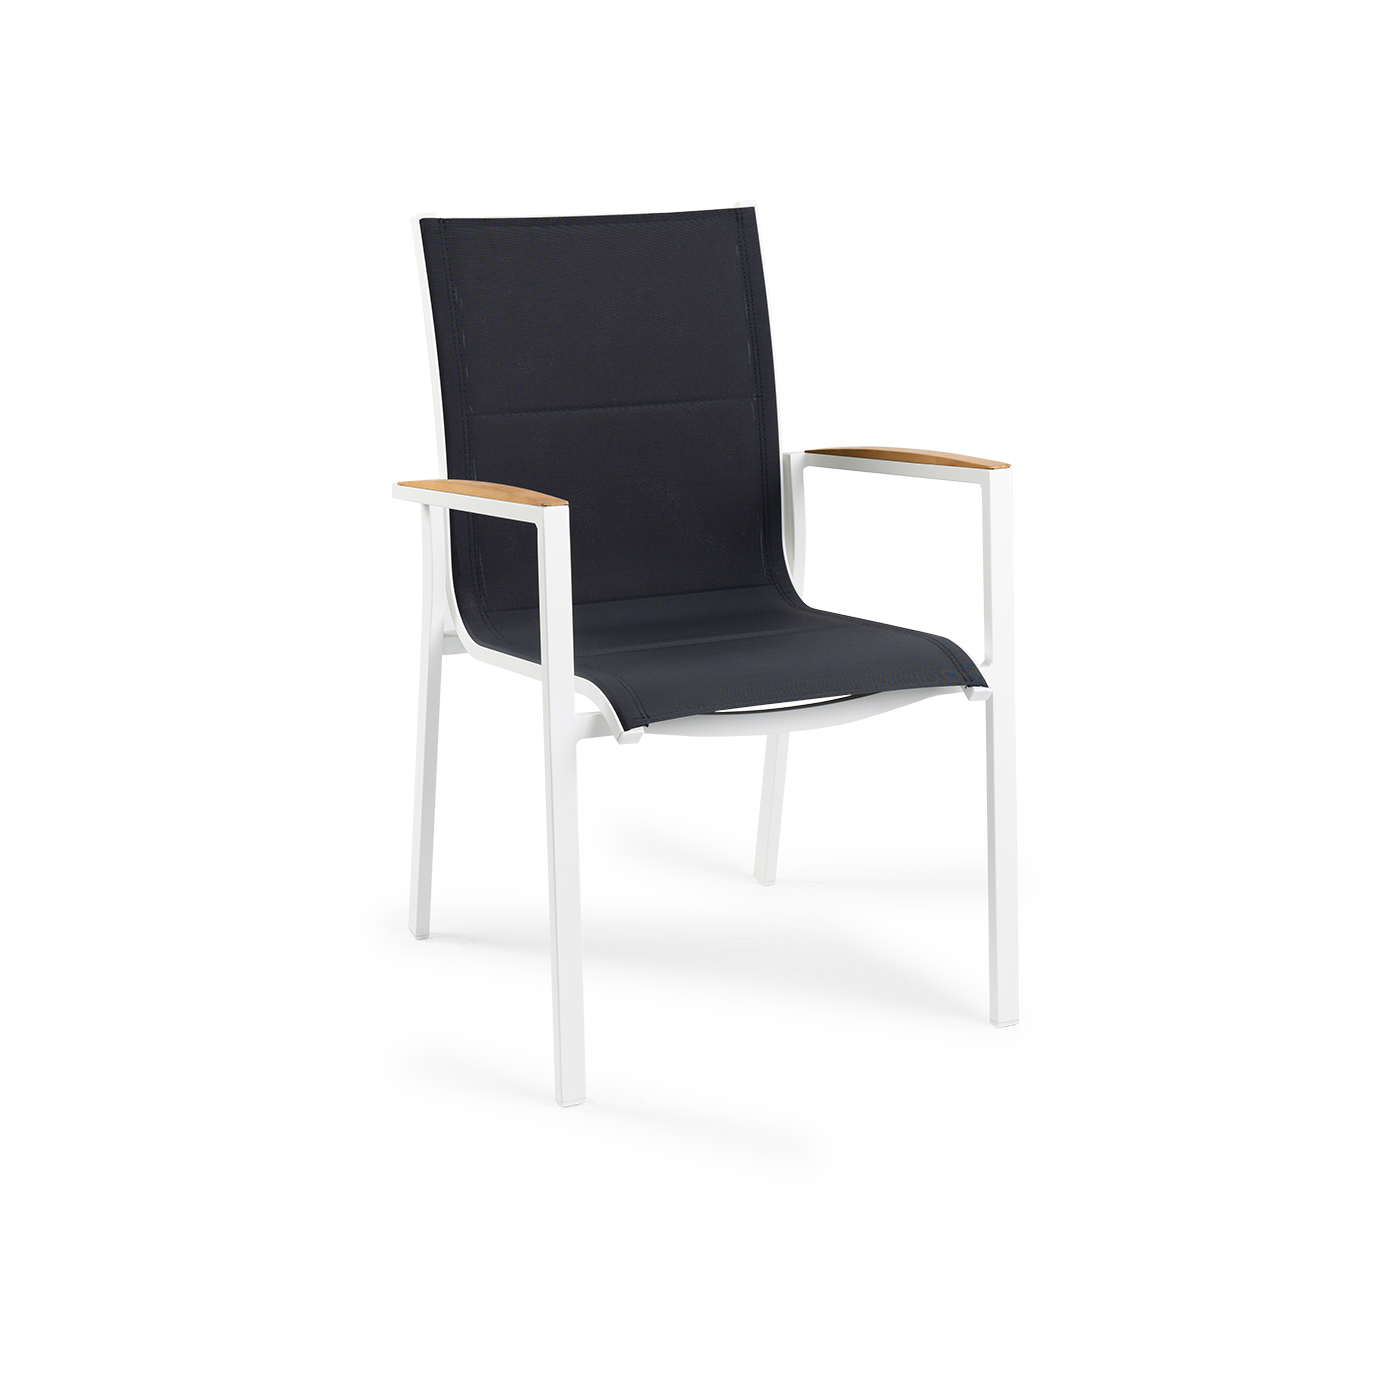 Foxx Teak Stackable Chair Creme White